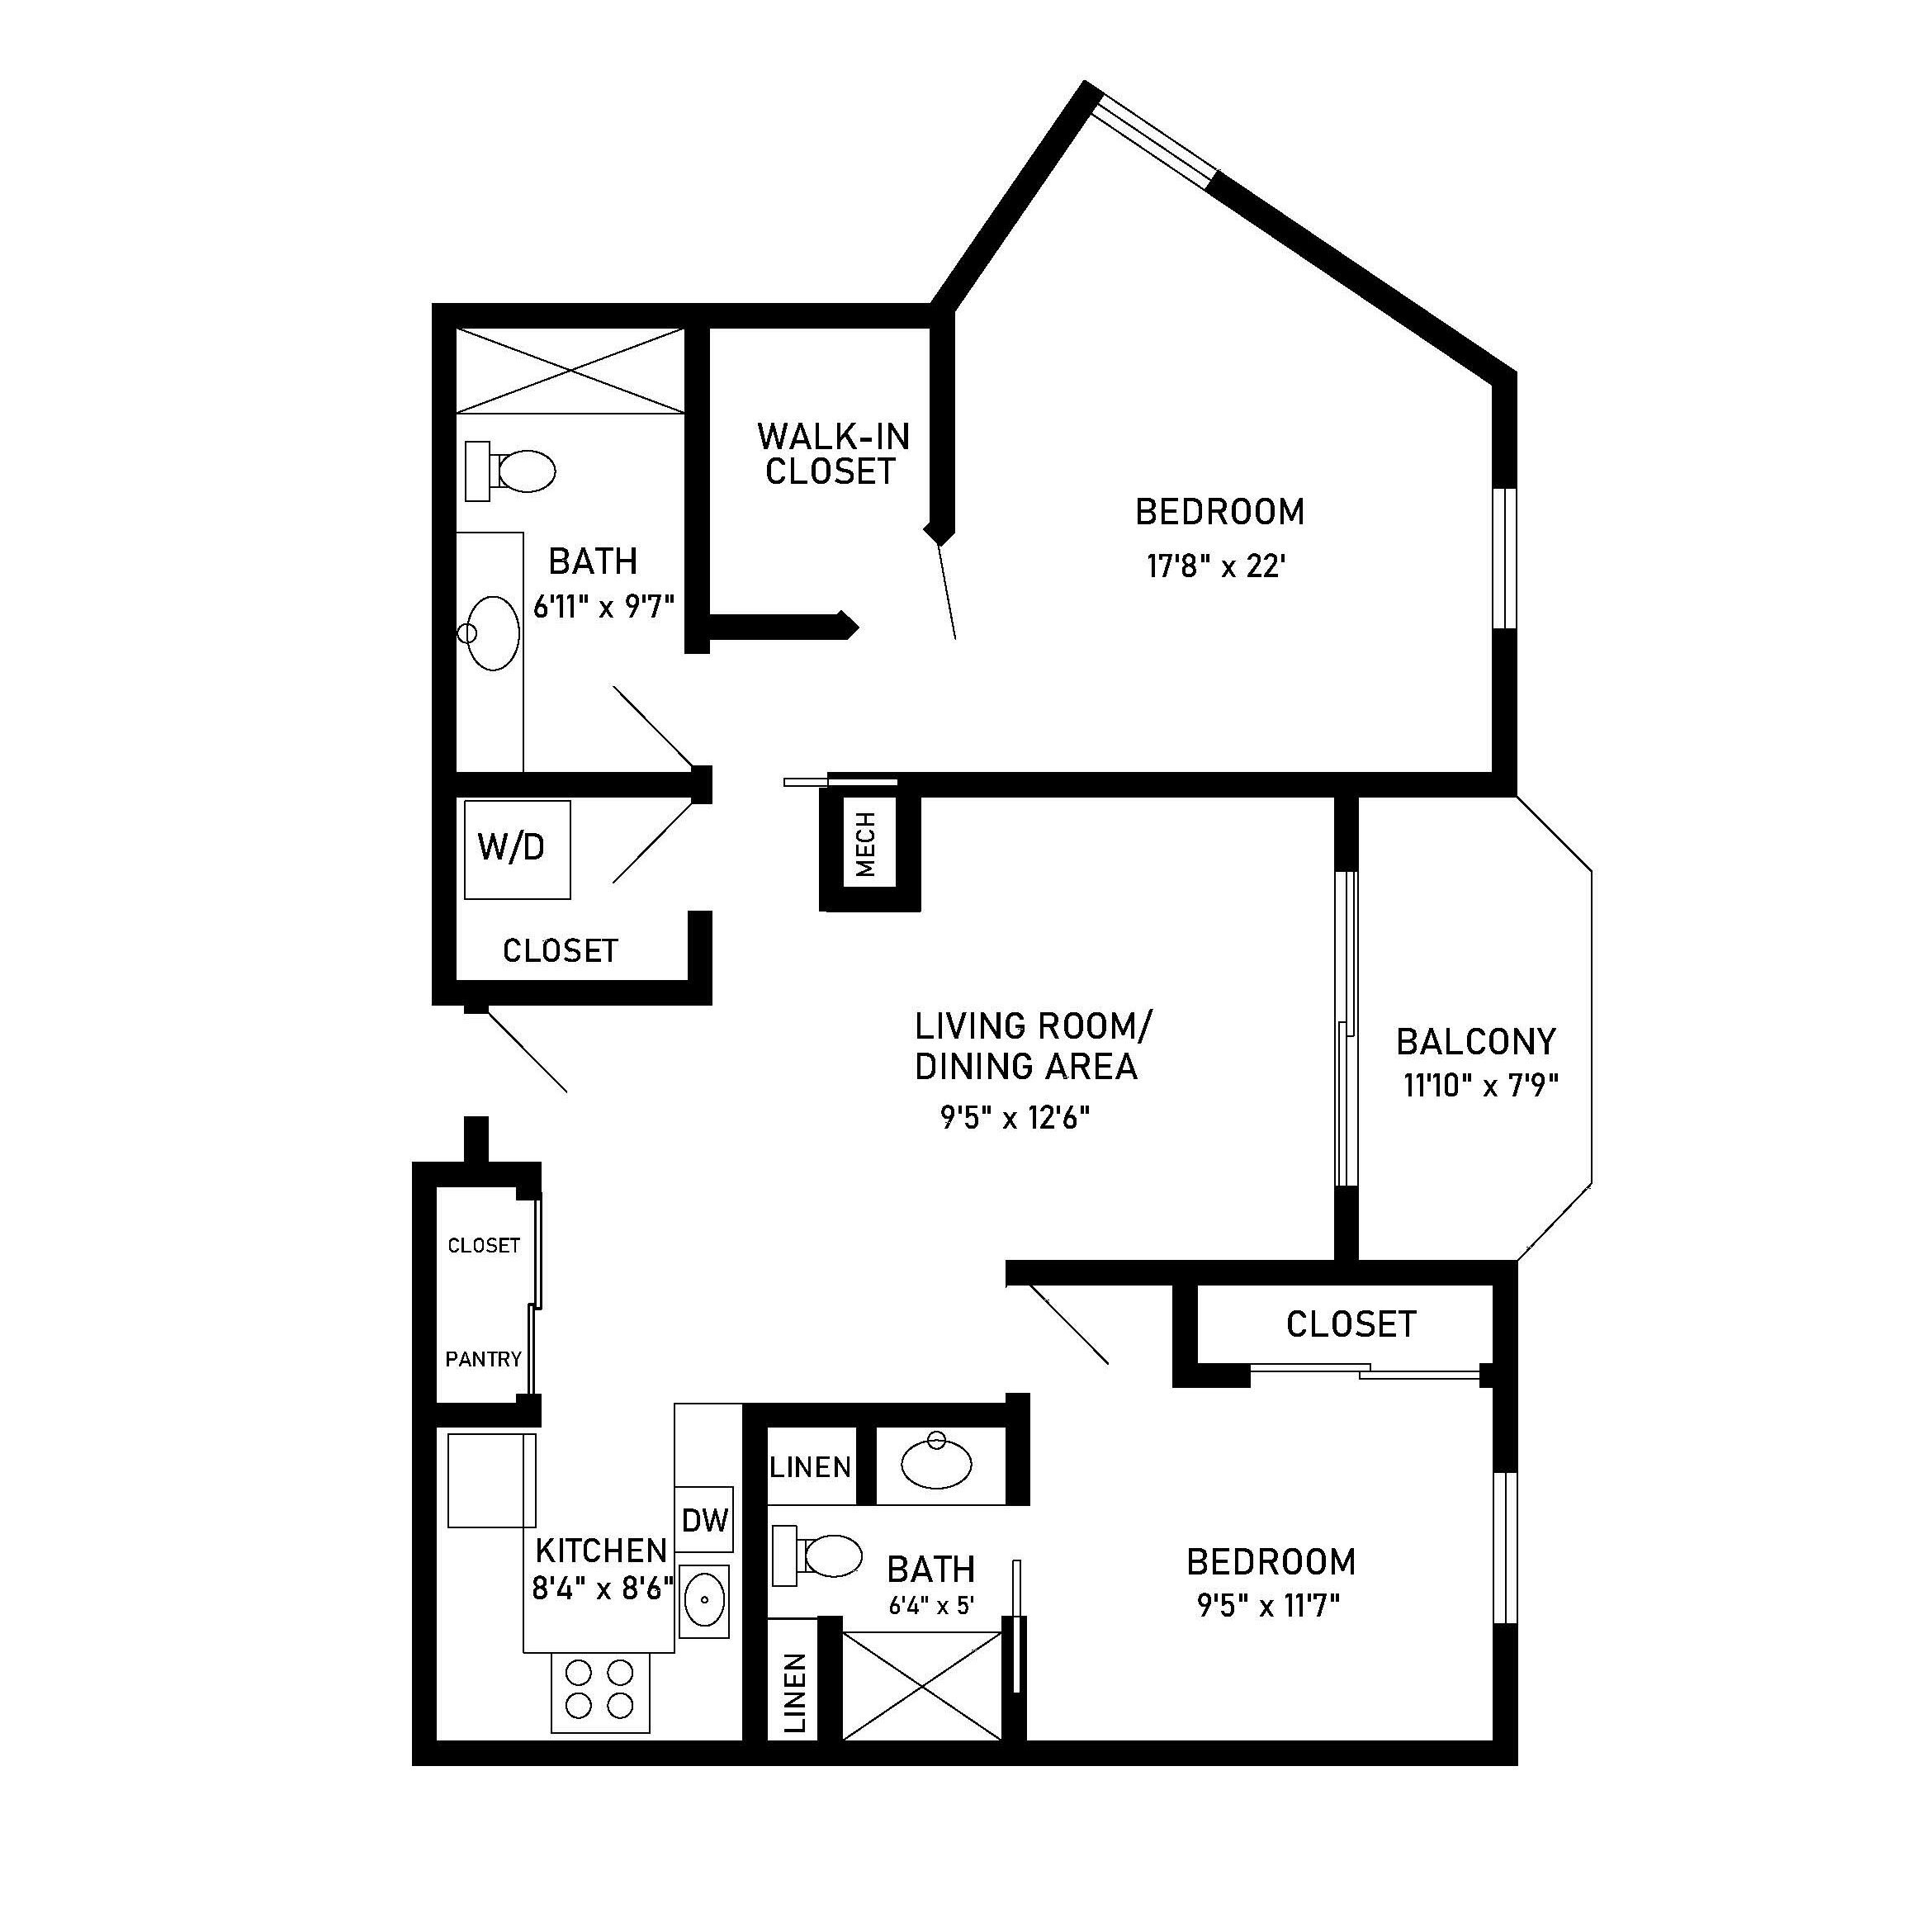 Maple 2 bed 2 bath apartment floor plan